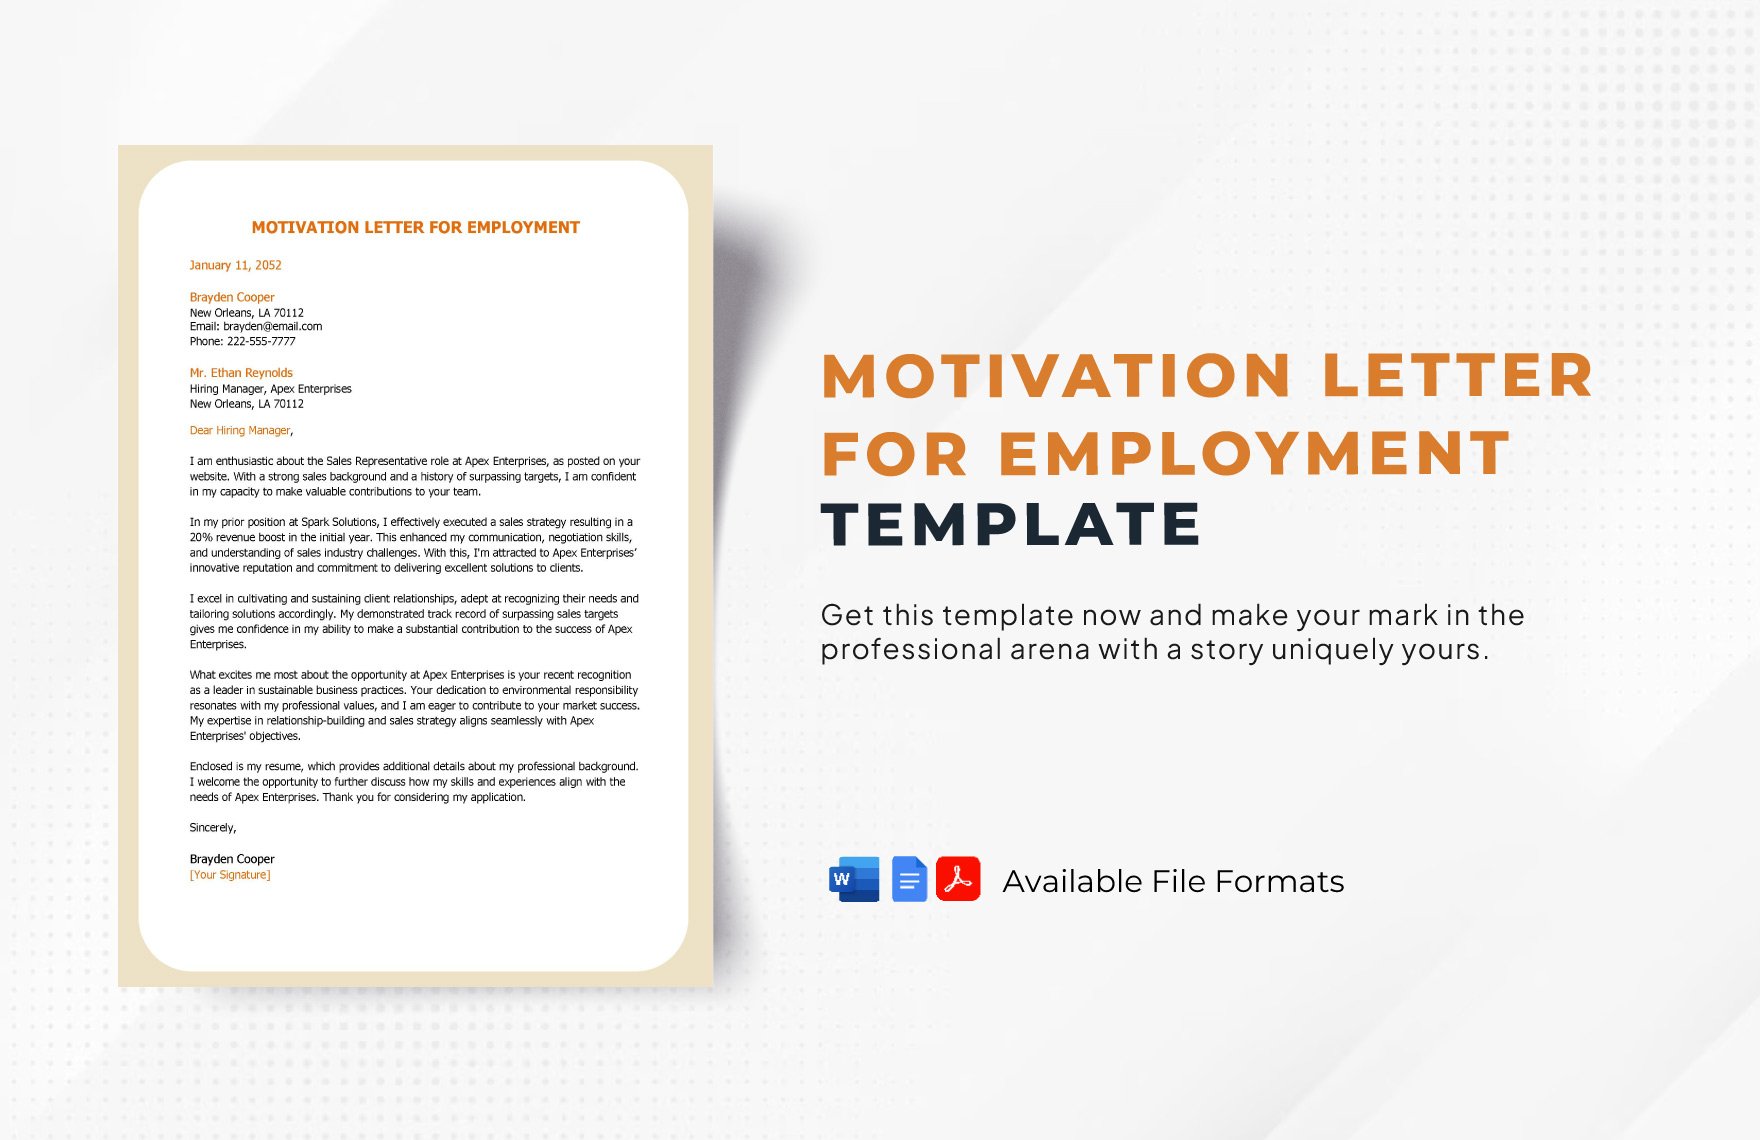 Motivation Letter for Employment Template